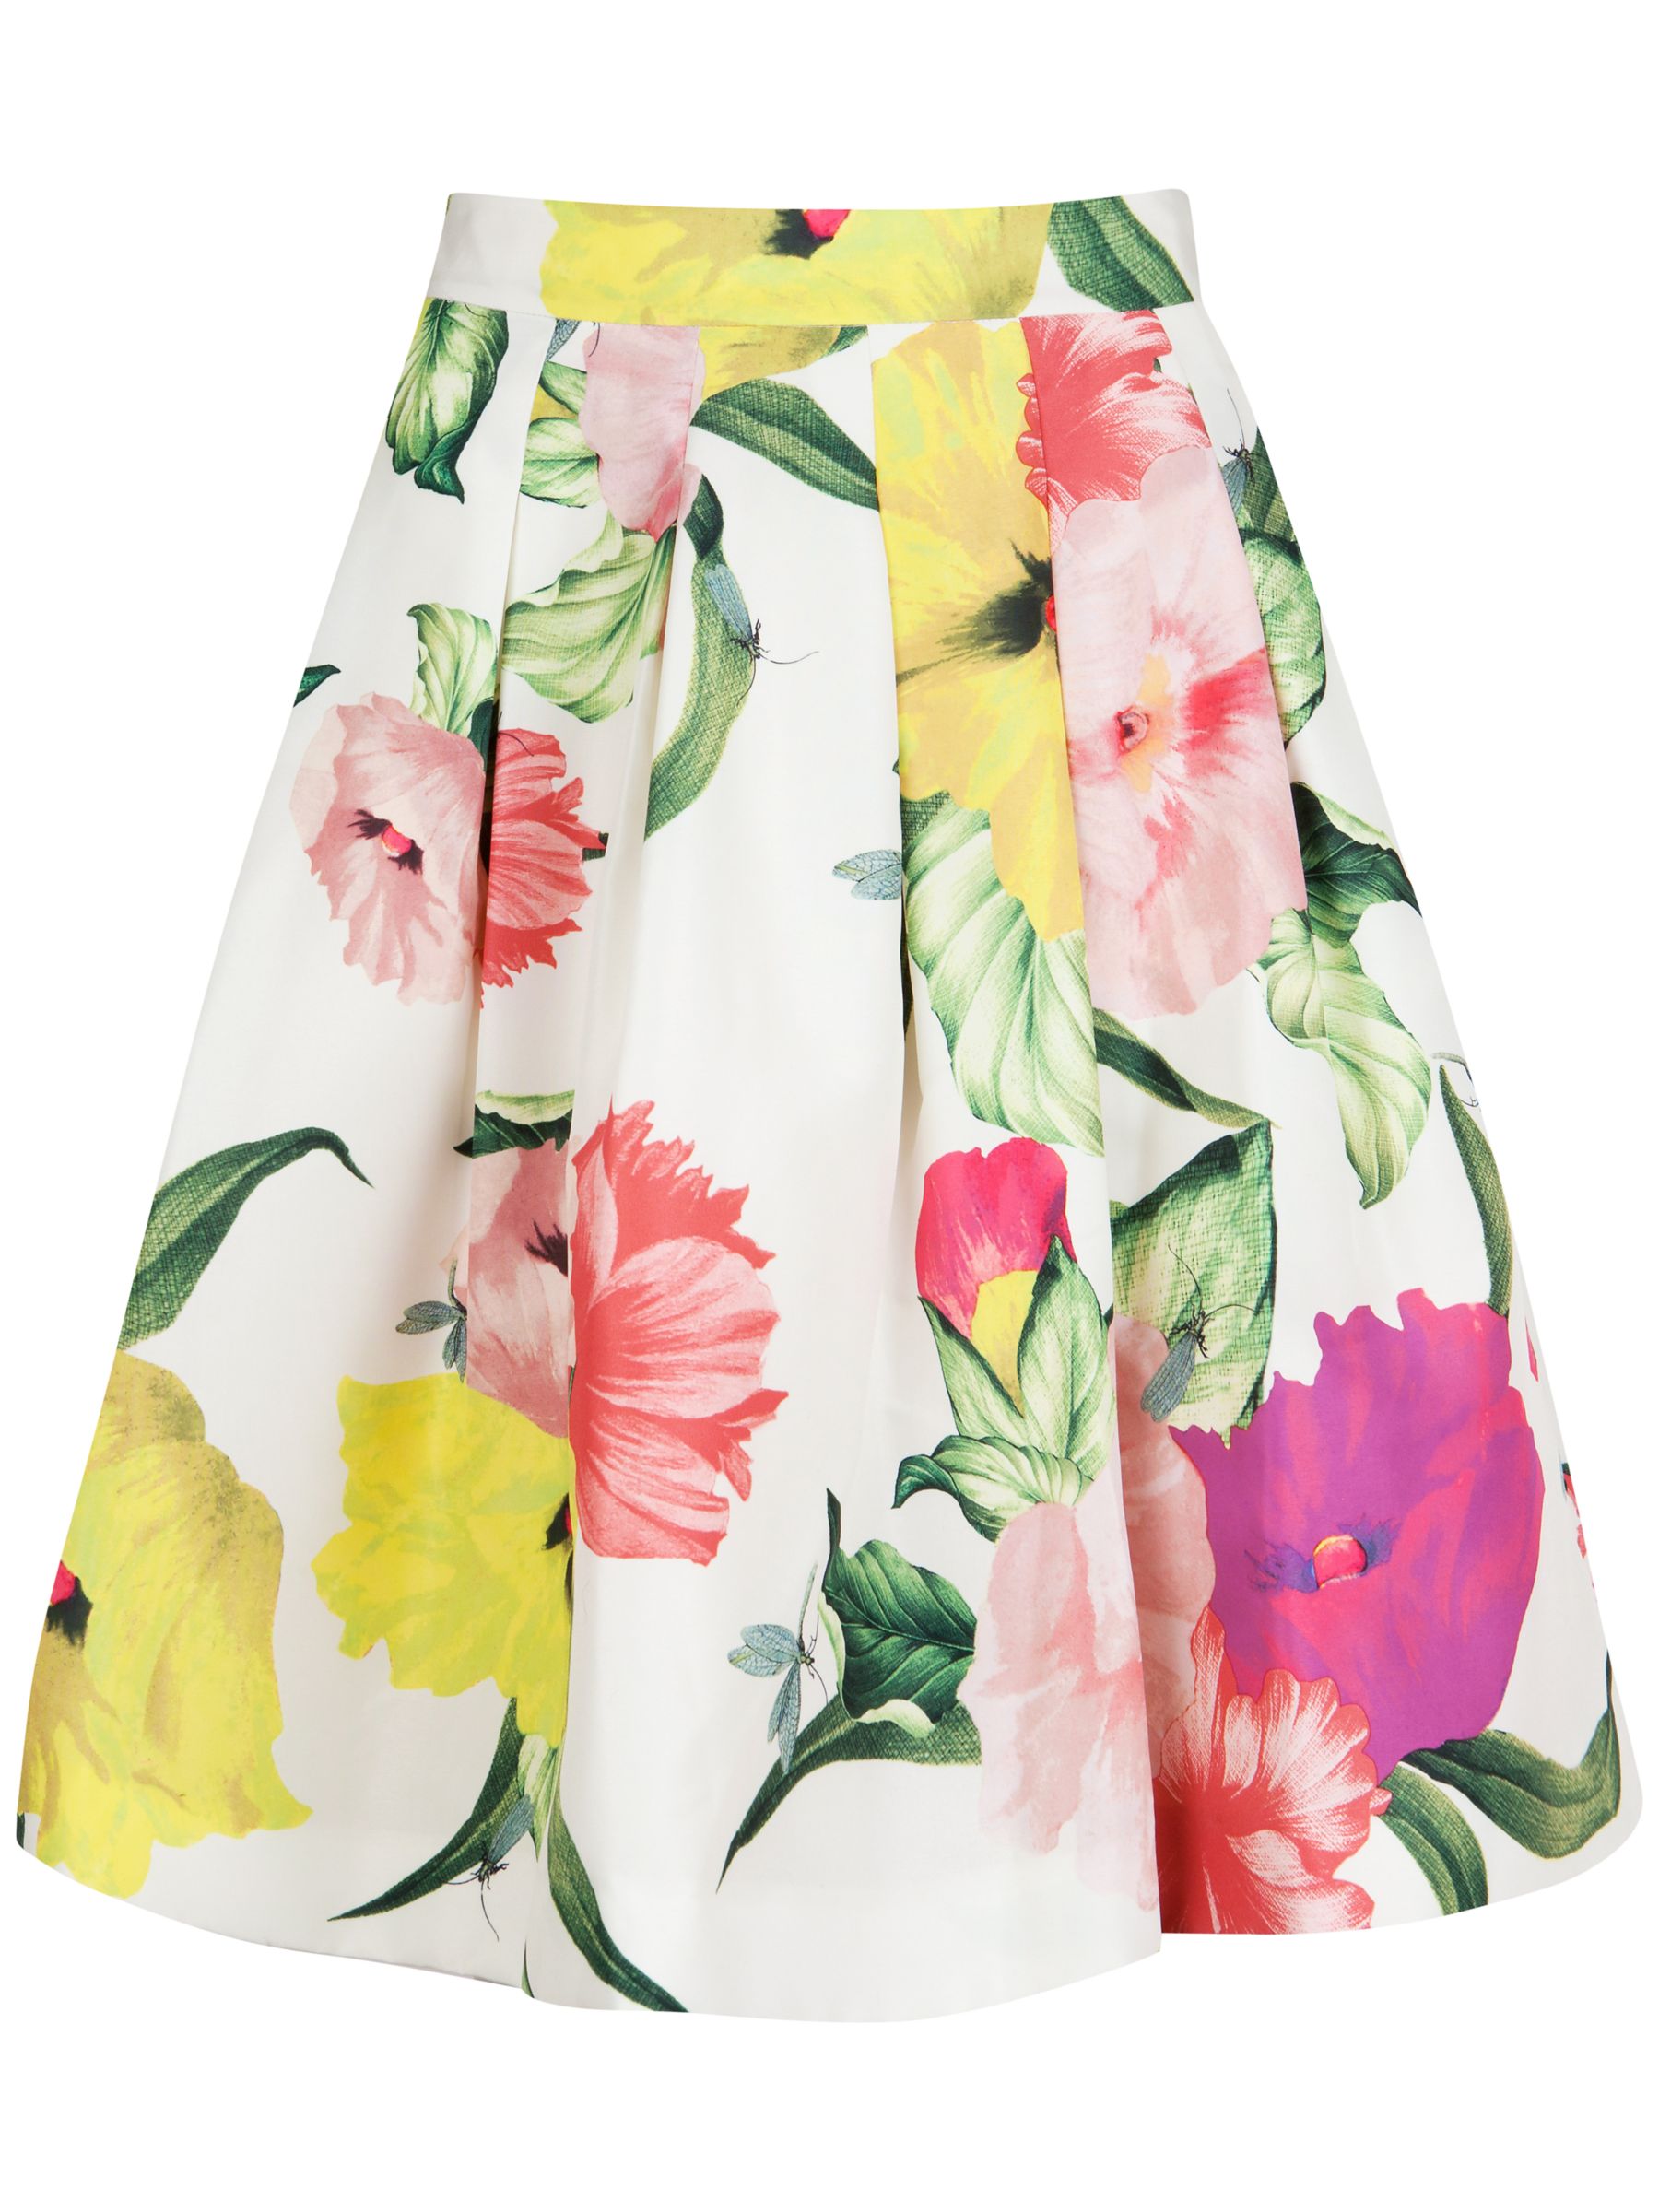 Ted Baker Muirin Floral Print Skirt, Cream at John Lewis & Partners